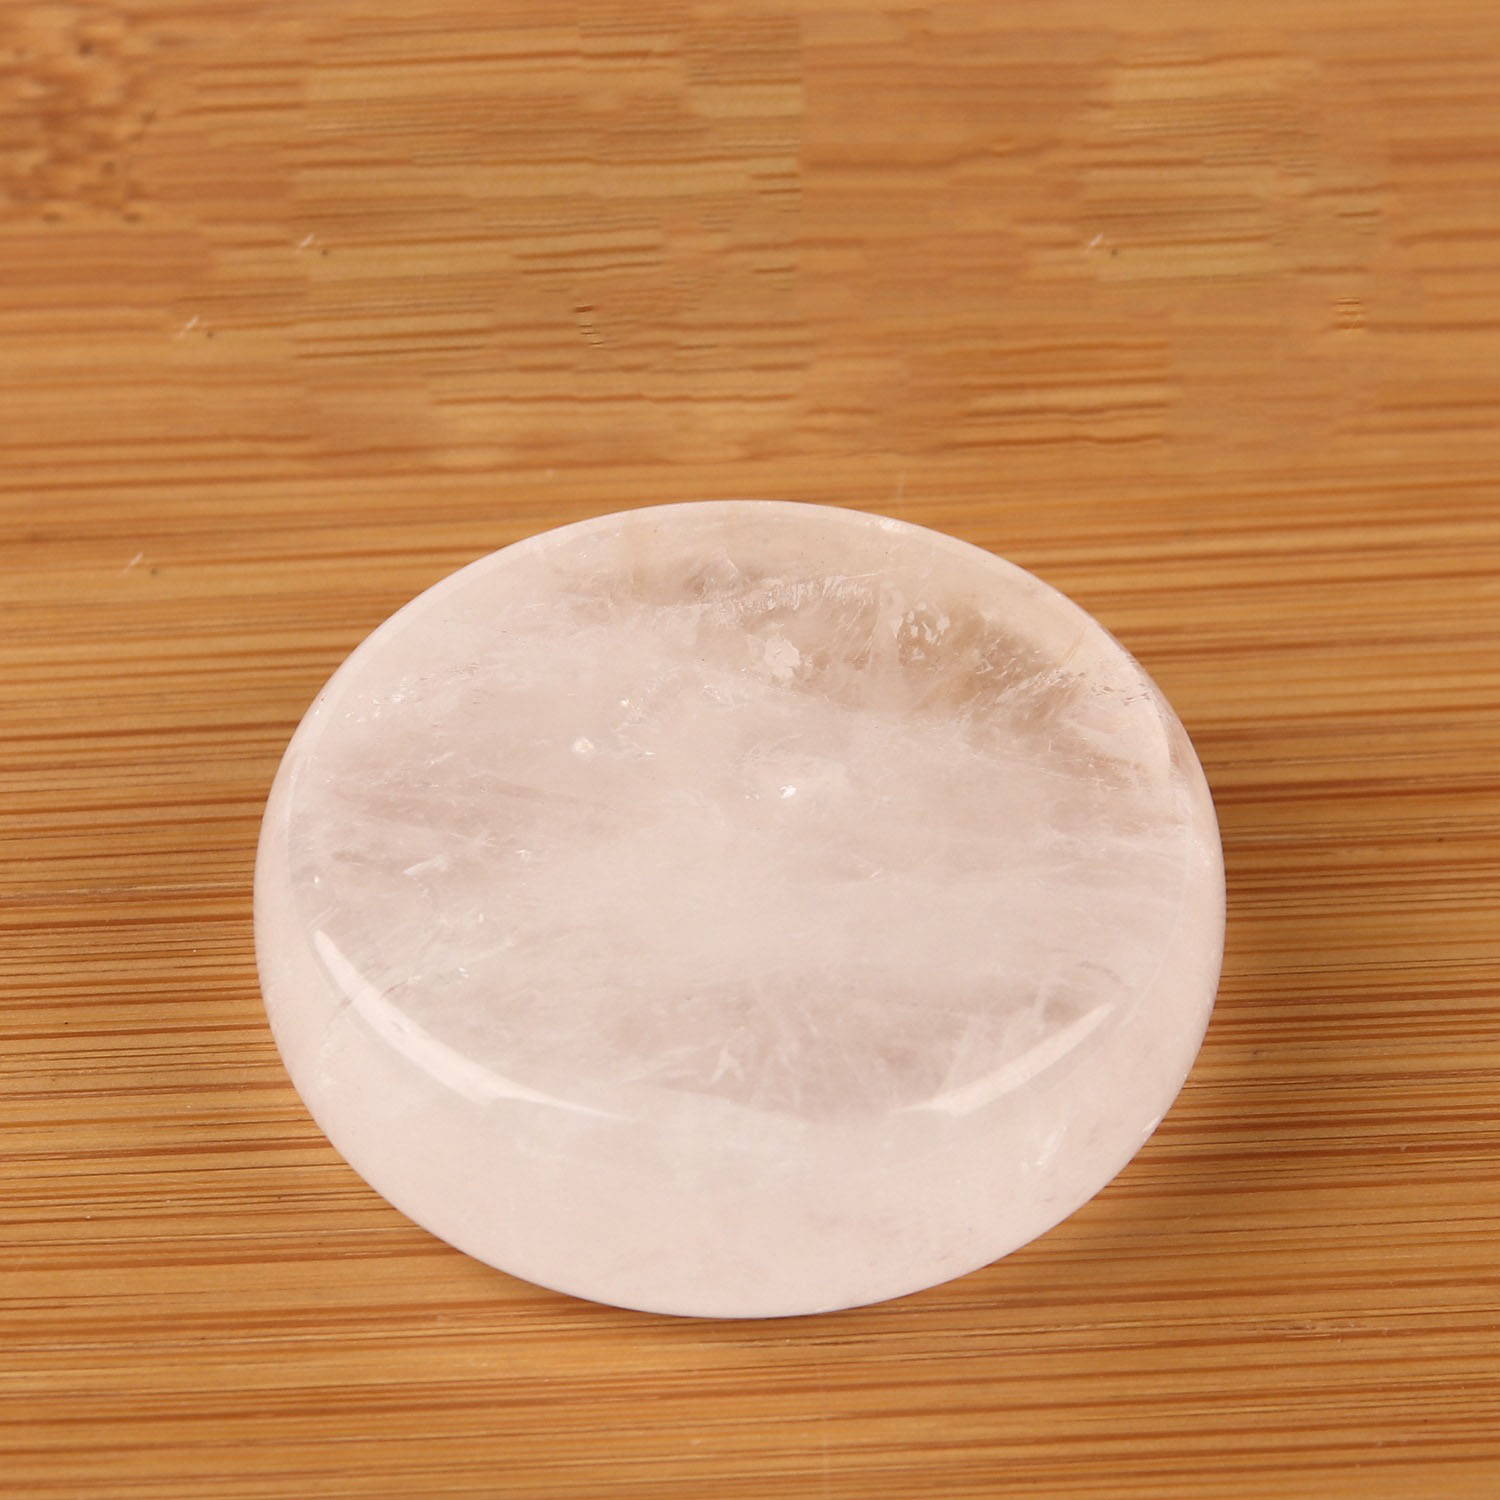 8:Natural white crystal